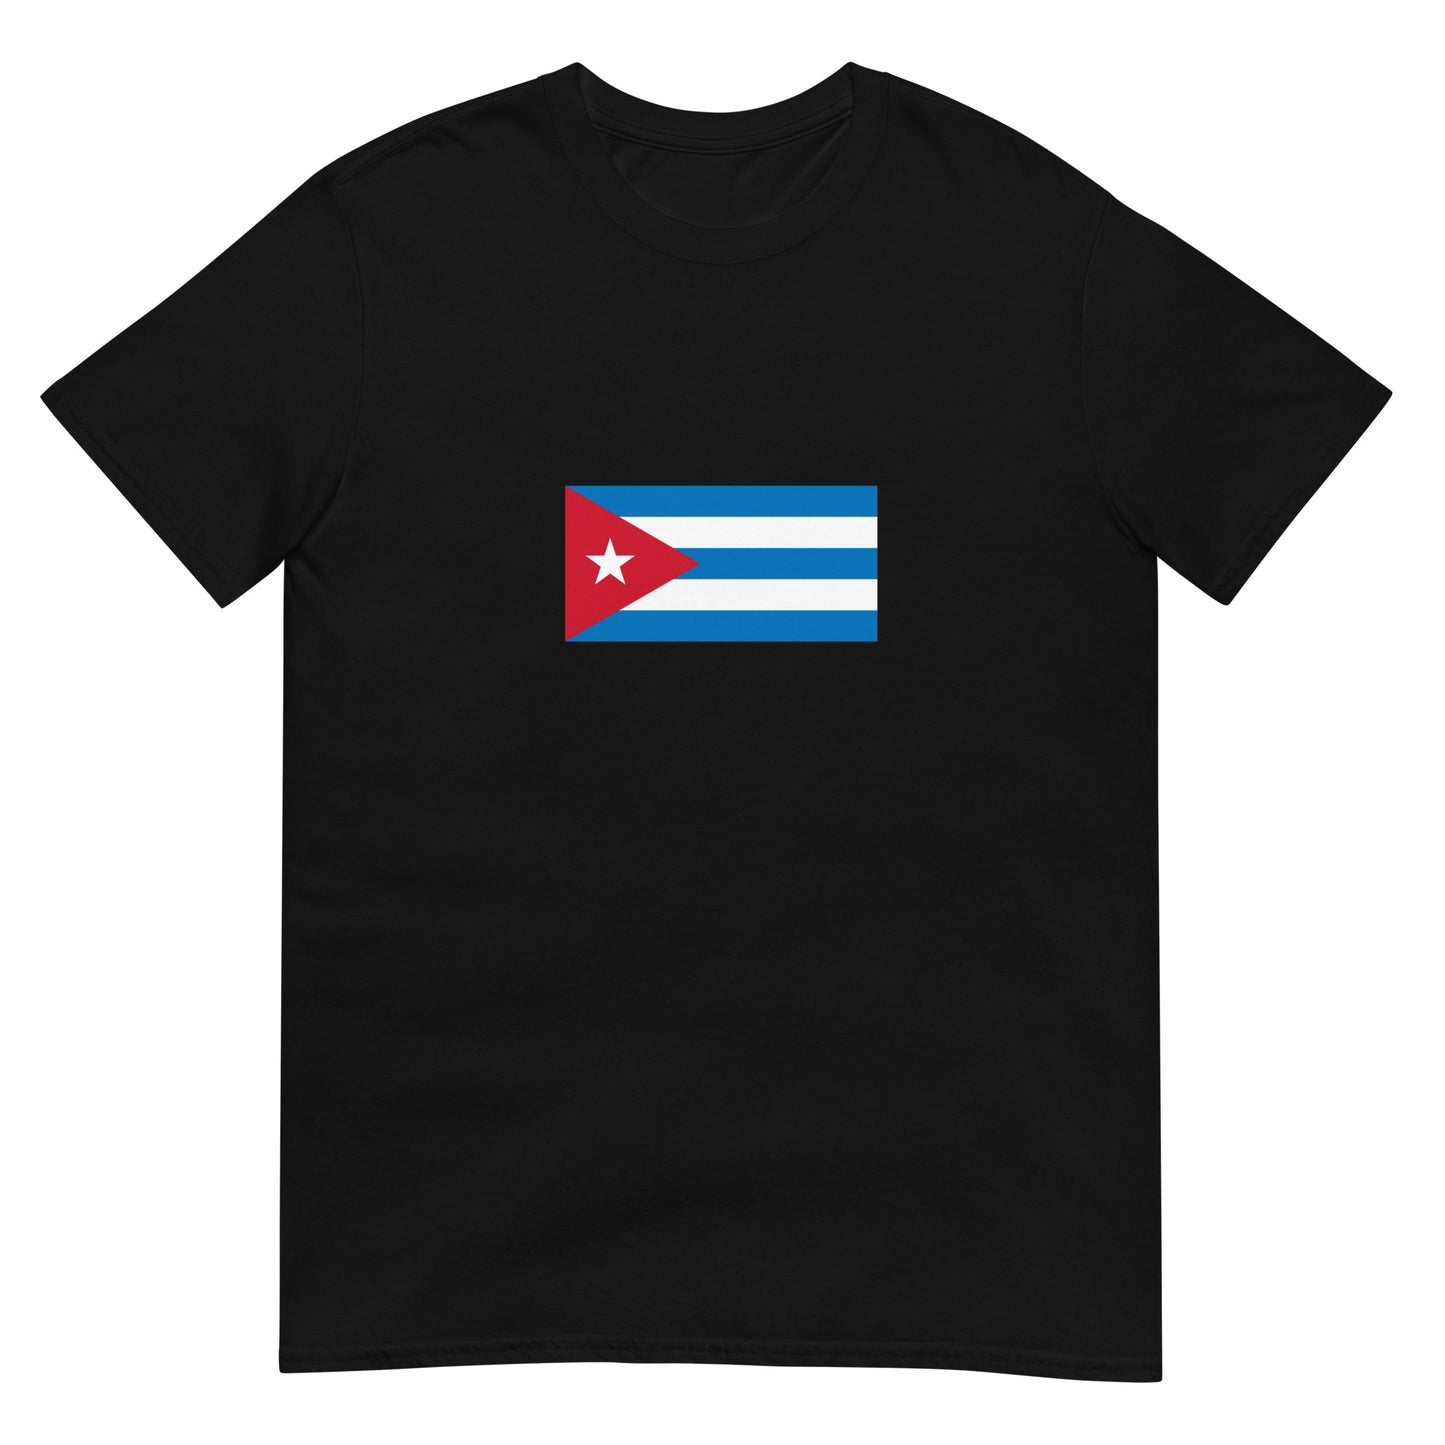 Cuba - First Republic of Cuba (1902-1959) | Historical Flag Short-Sleeve Unisex T-Shirt